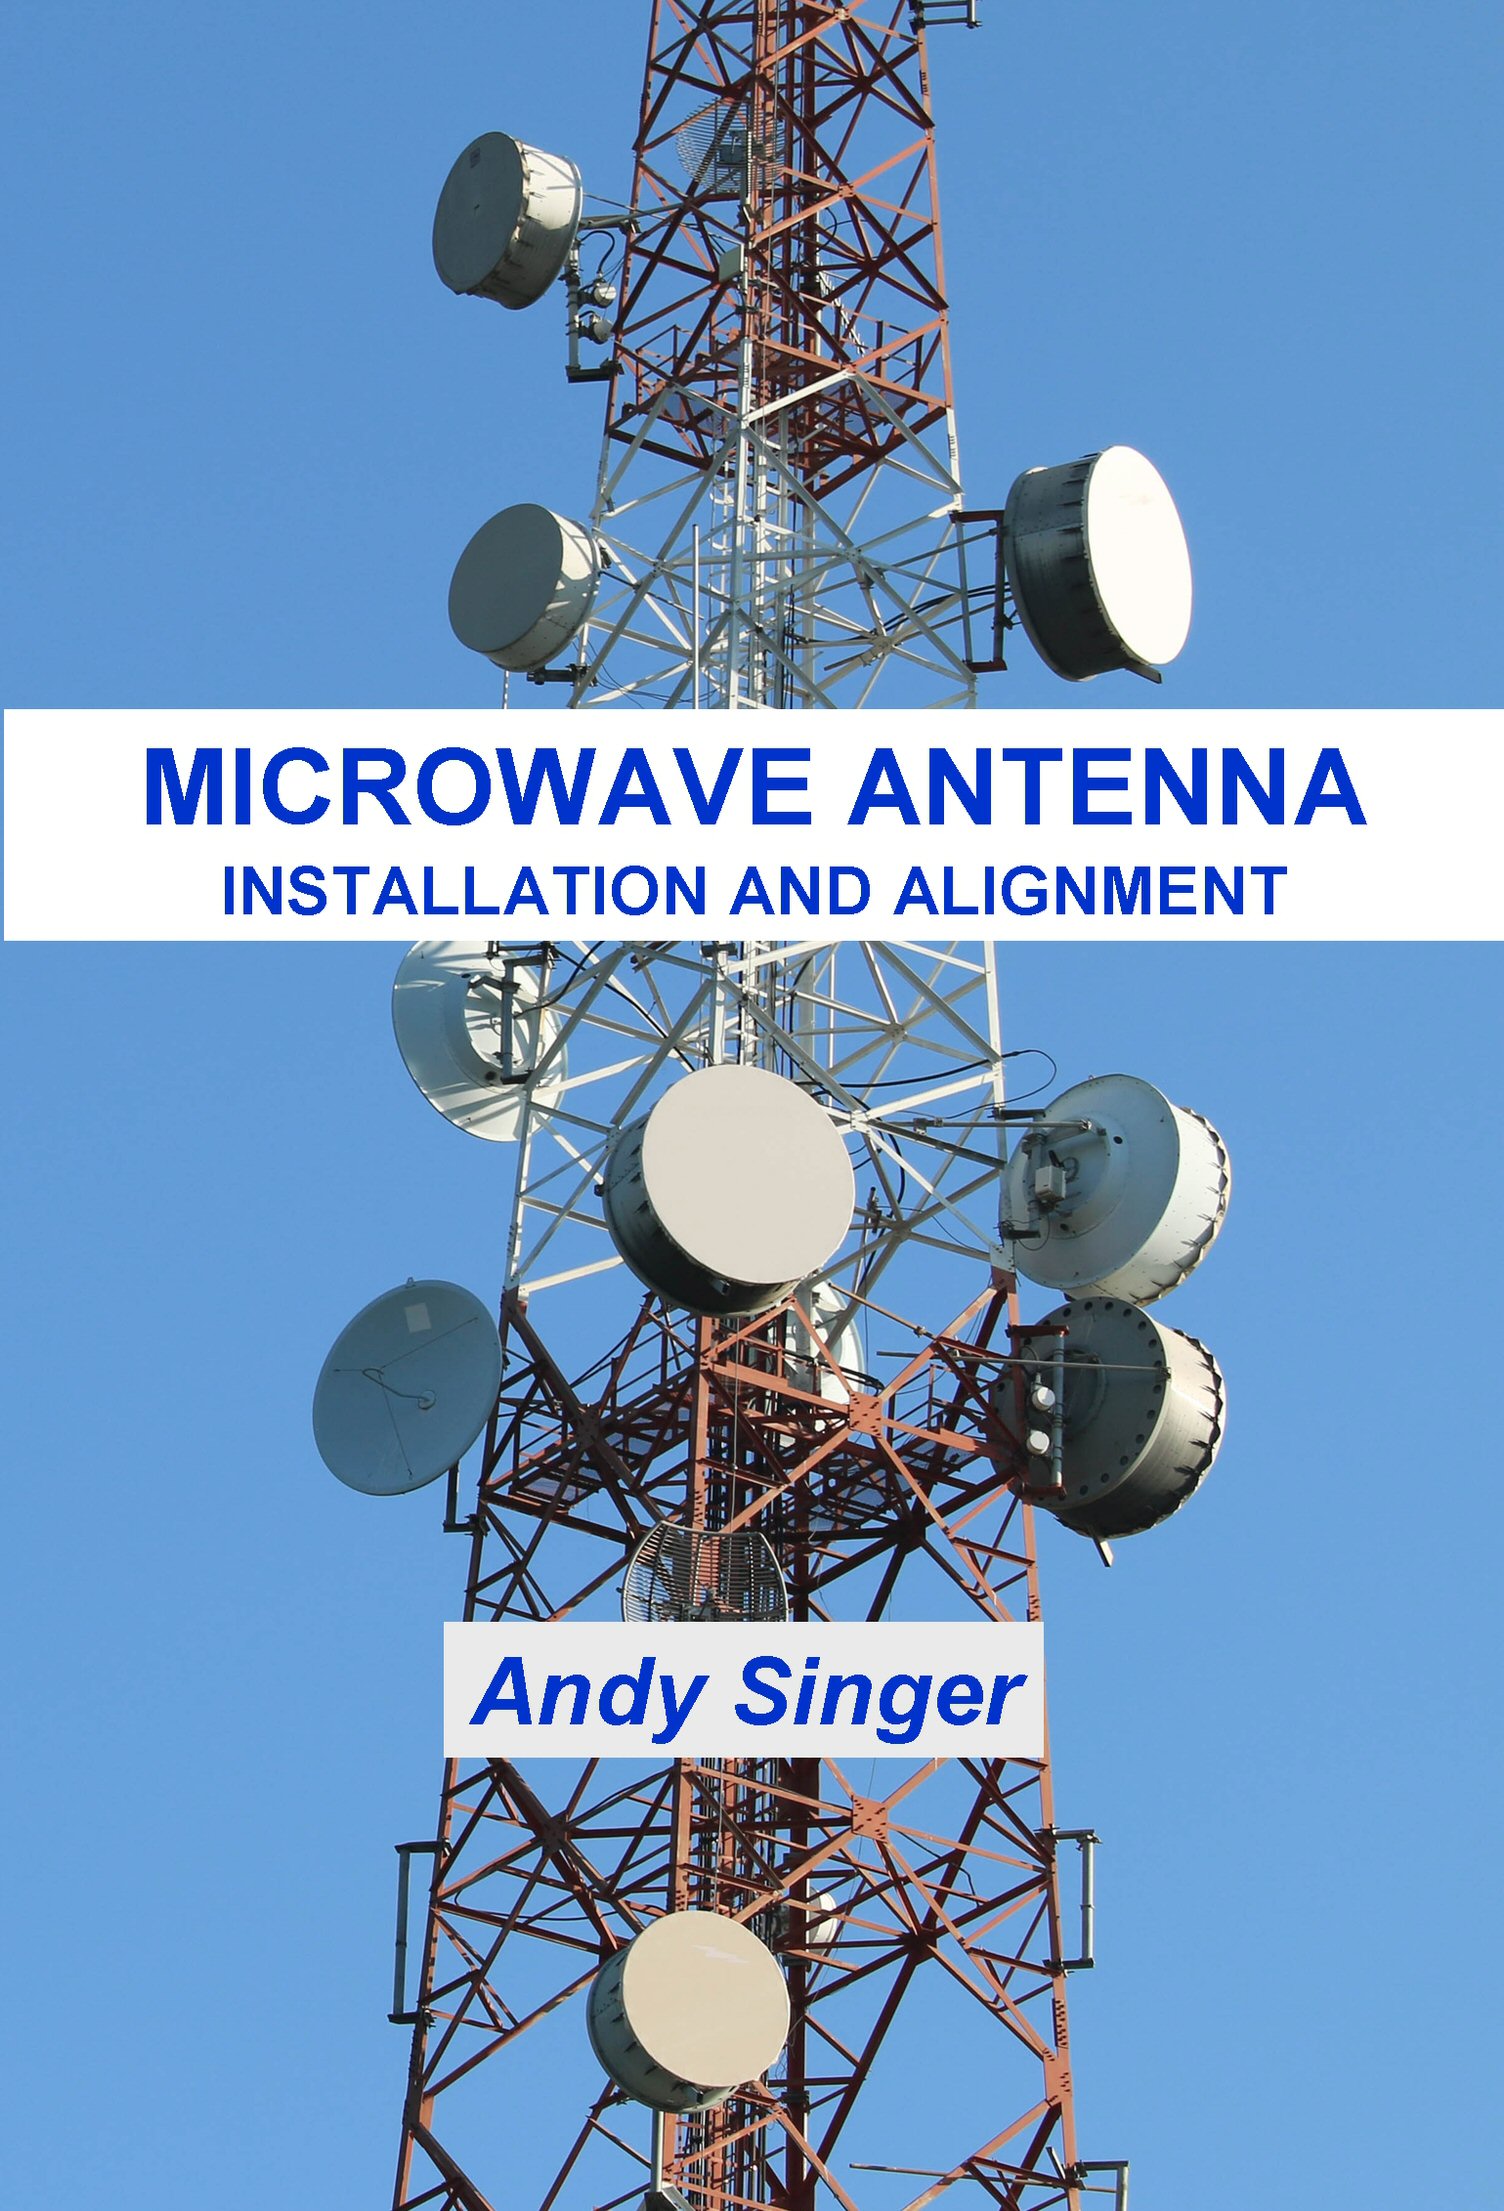 Microwave Antenna System Basics, Installation & Alignment Training